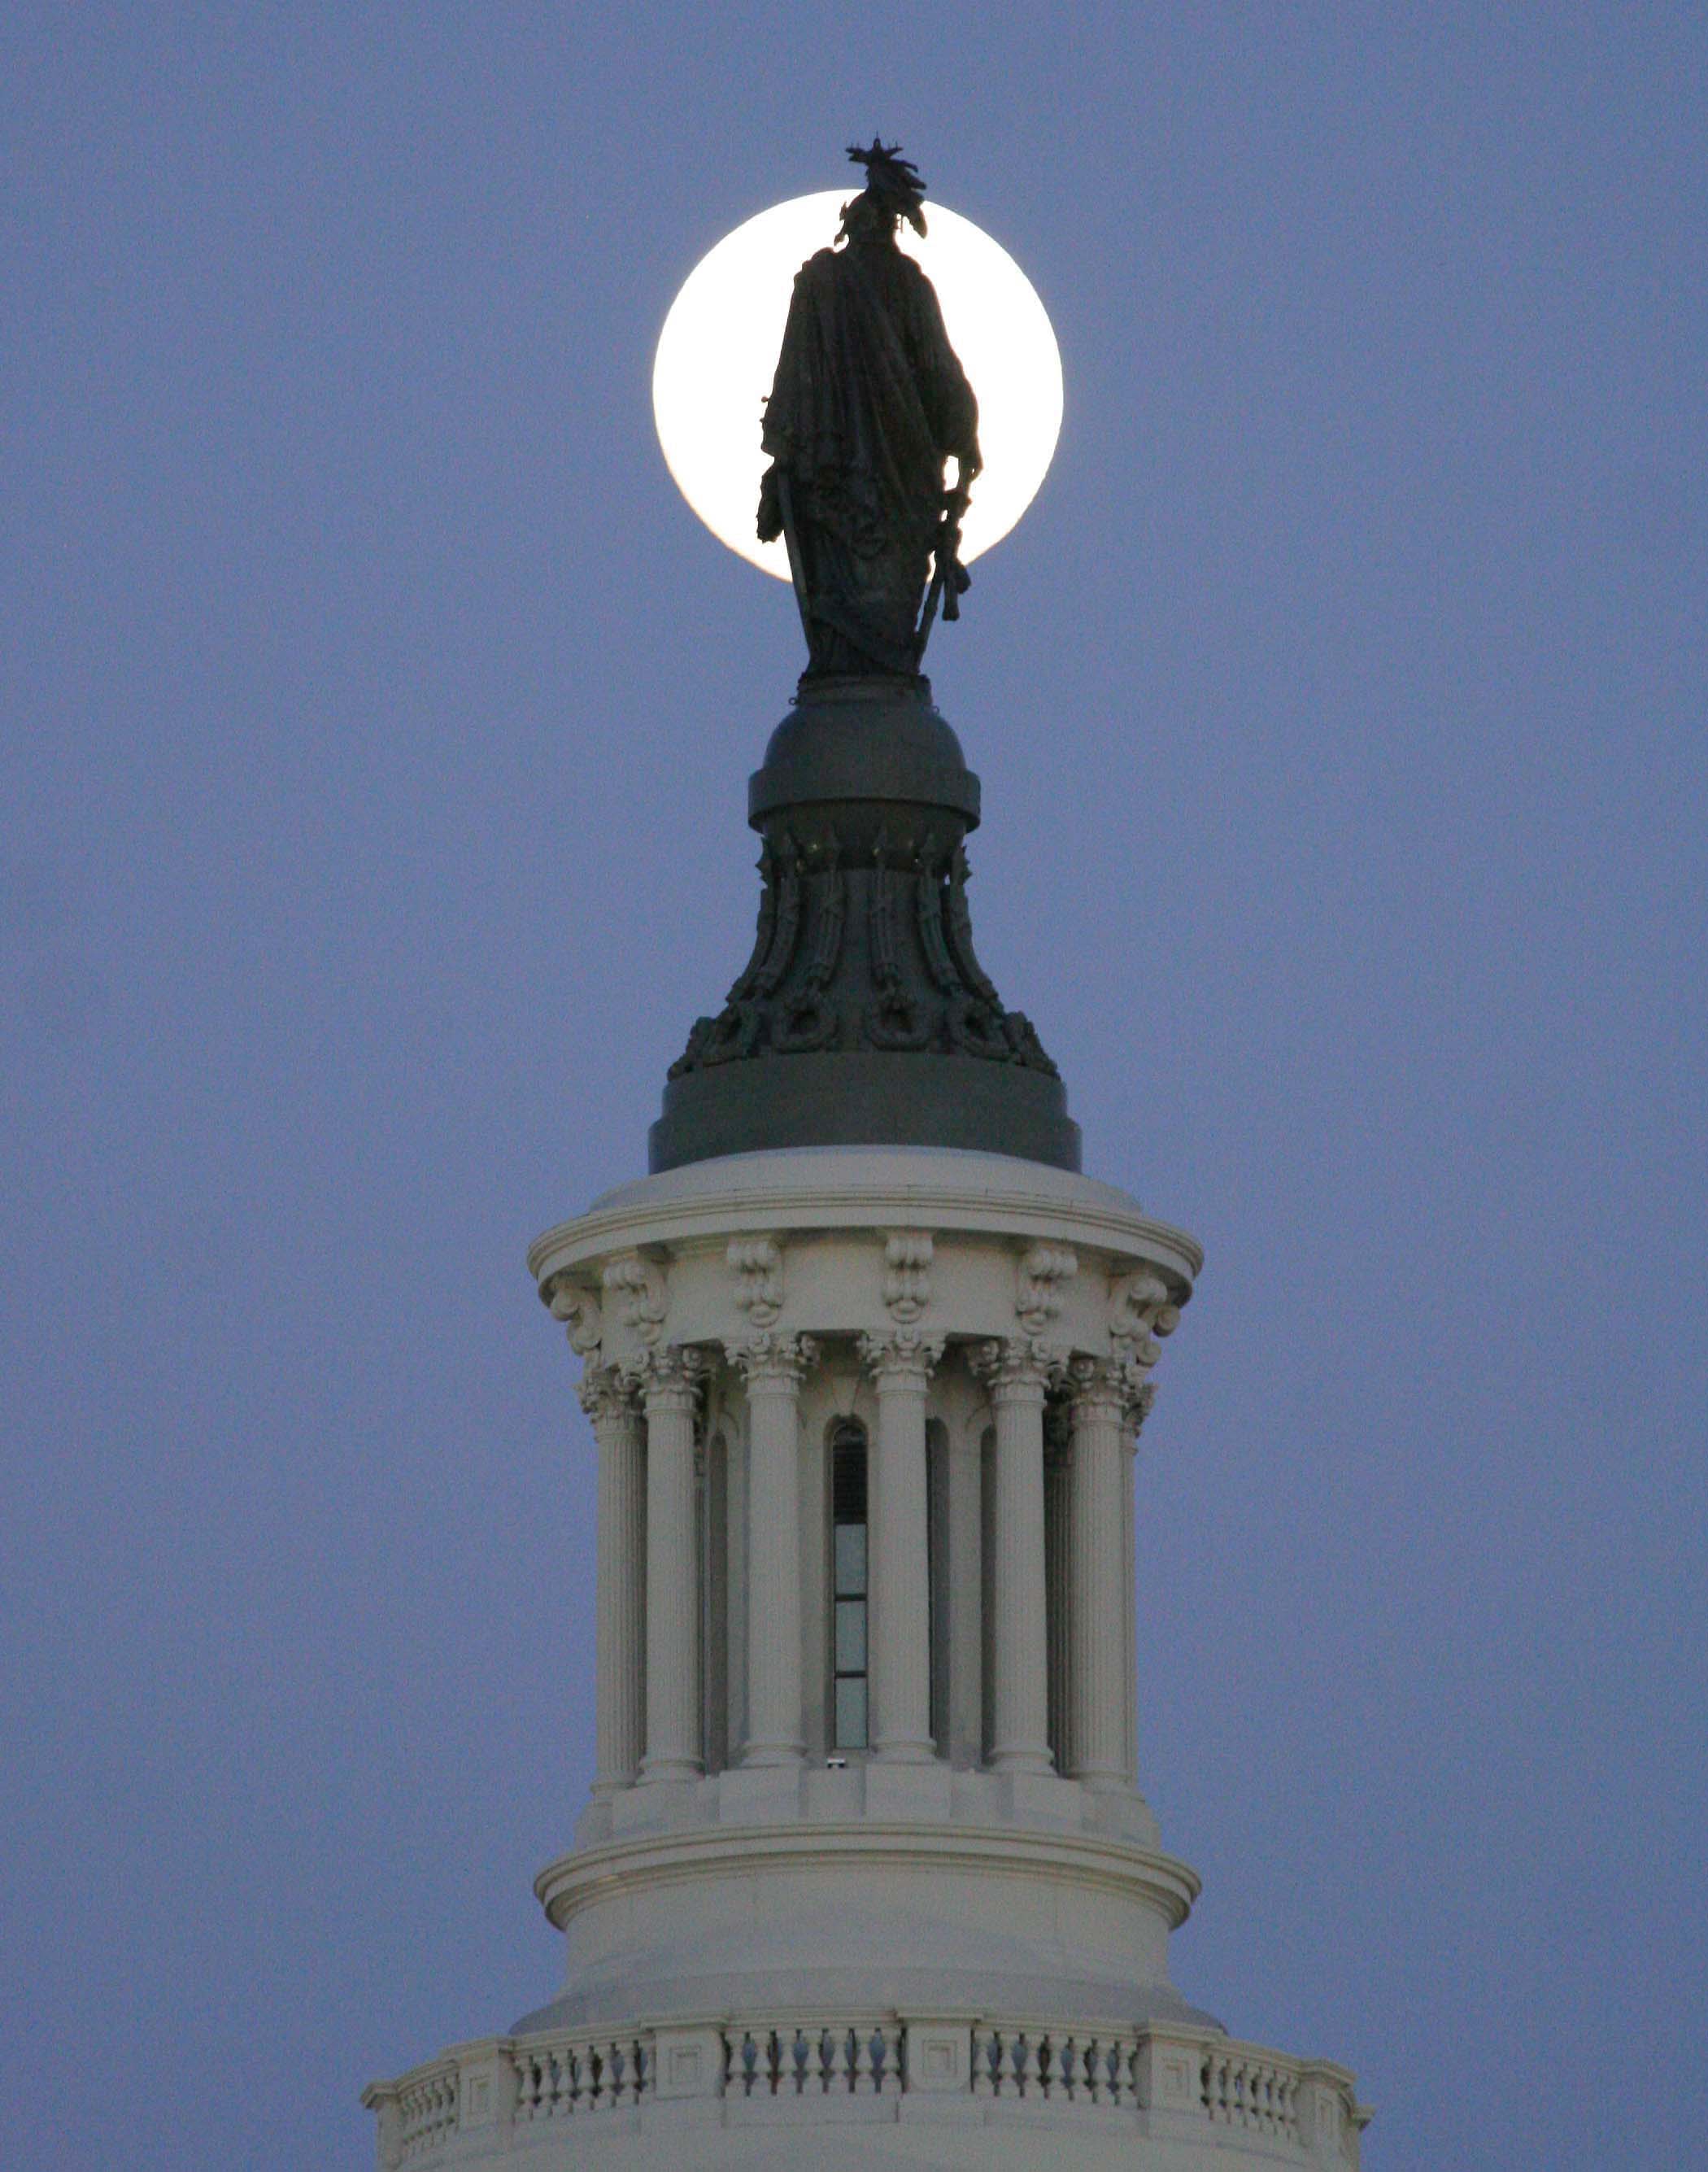 File:Freedom Statue full moon.jpg - Wikimedia Commons